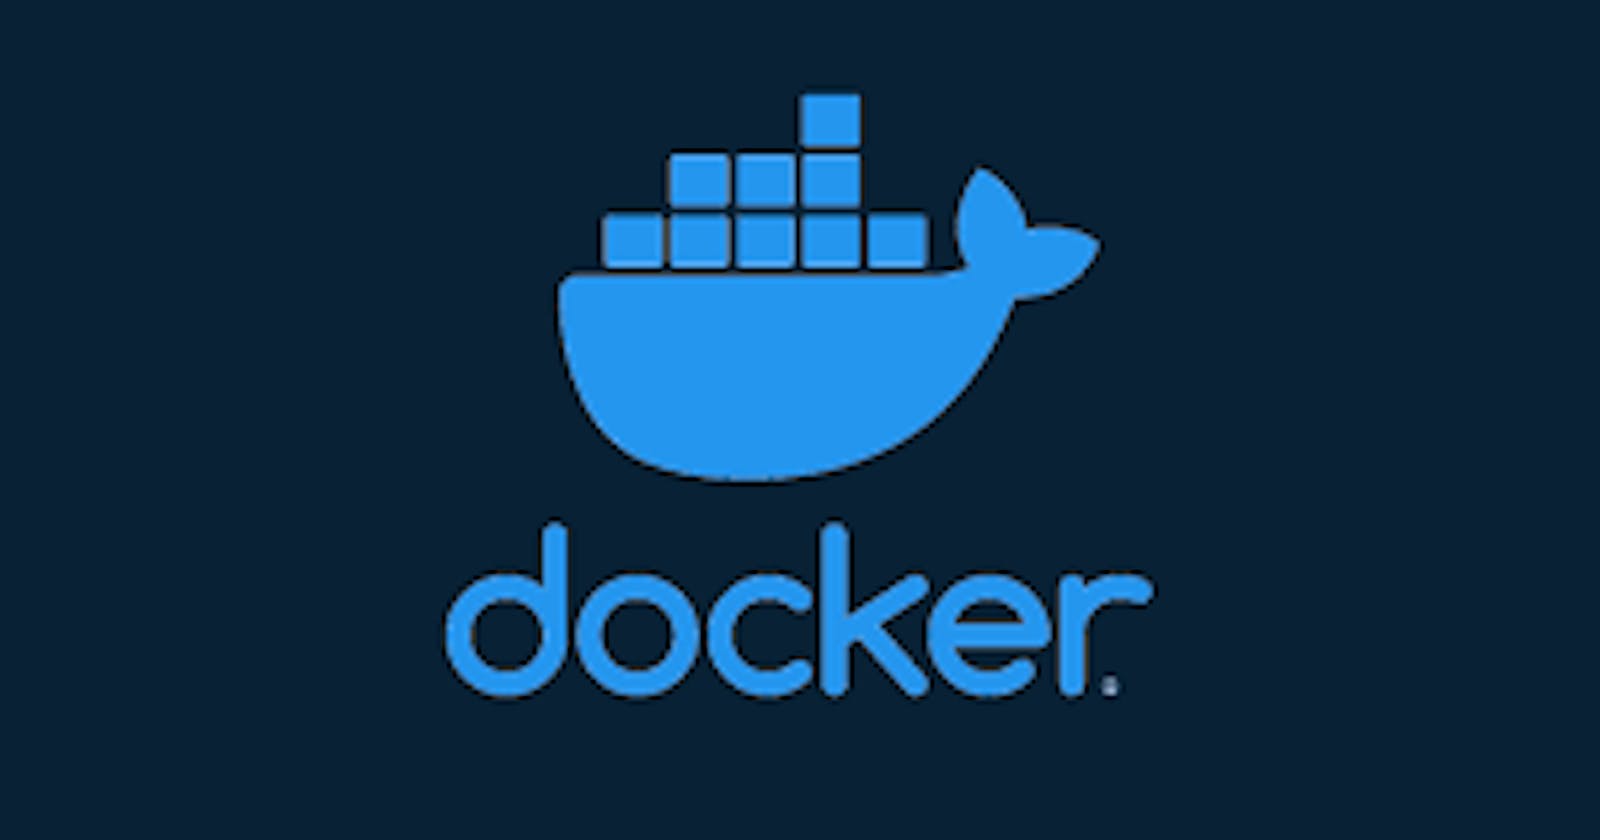 Day 16/17 - Intro to Docker